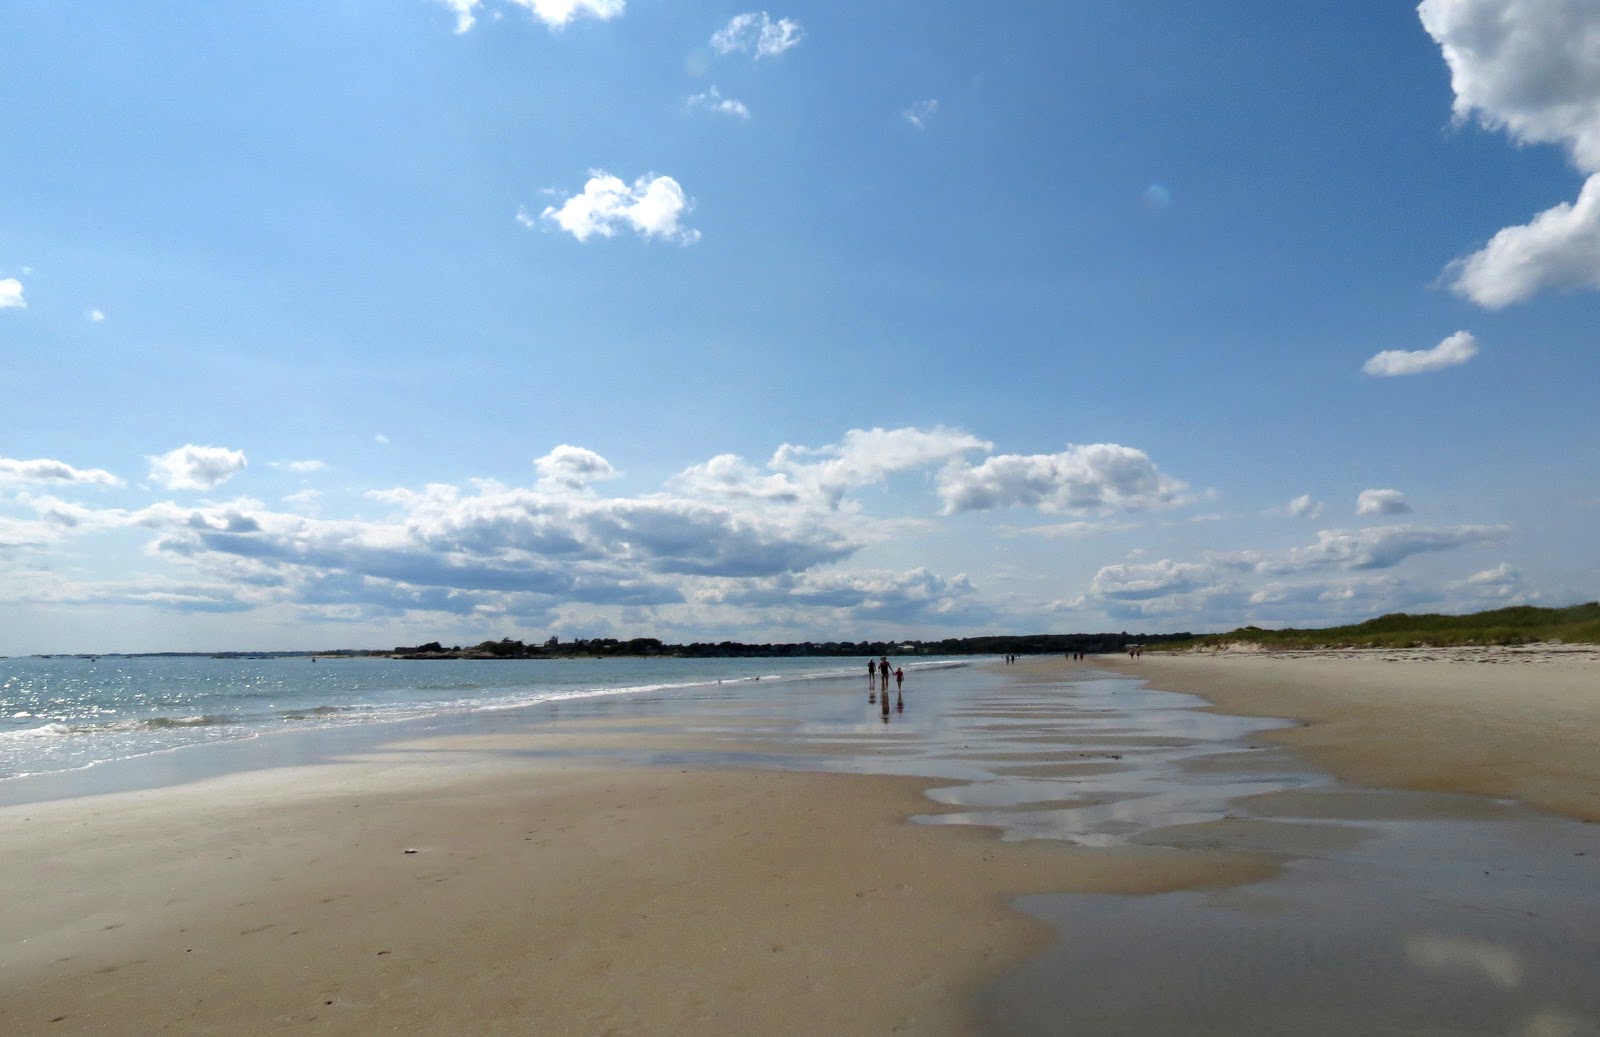 Fotografie cu Horseneck Beach II cu nivelul de curățenie in medie